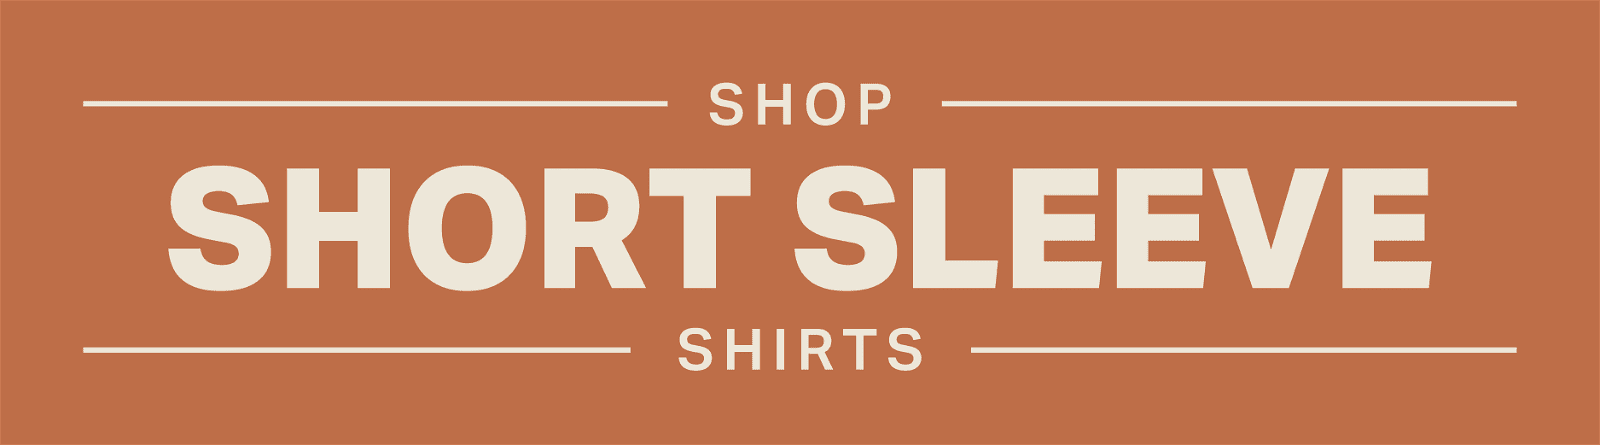 Shop All New Short Sleeve Shirts